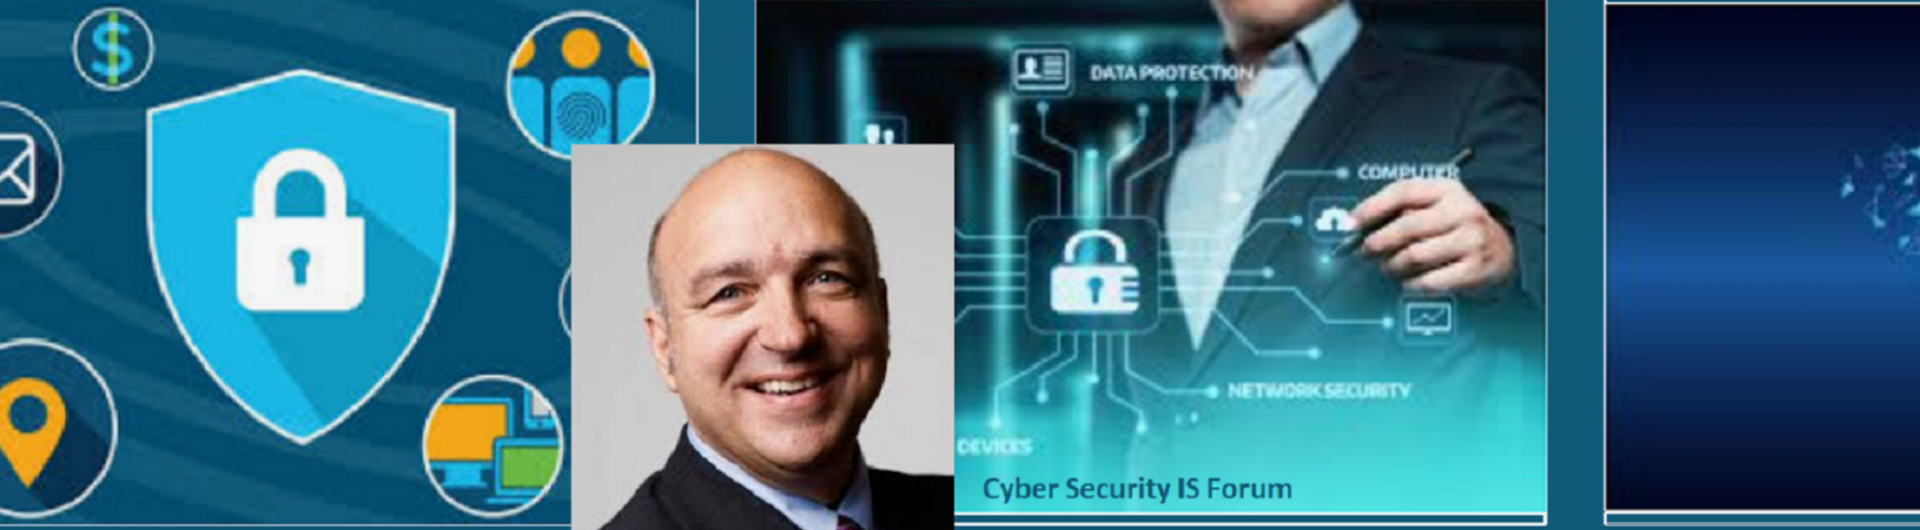 IS Industry Forum Cyber Sec Presentation: Douglass Landoll   